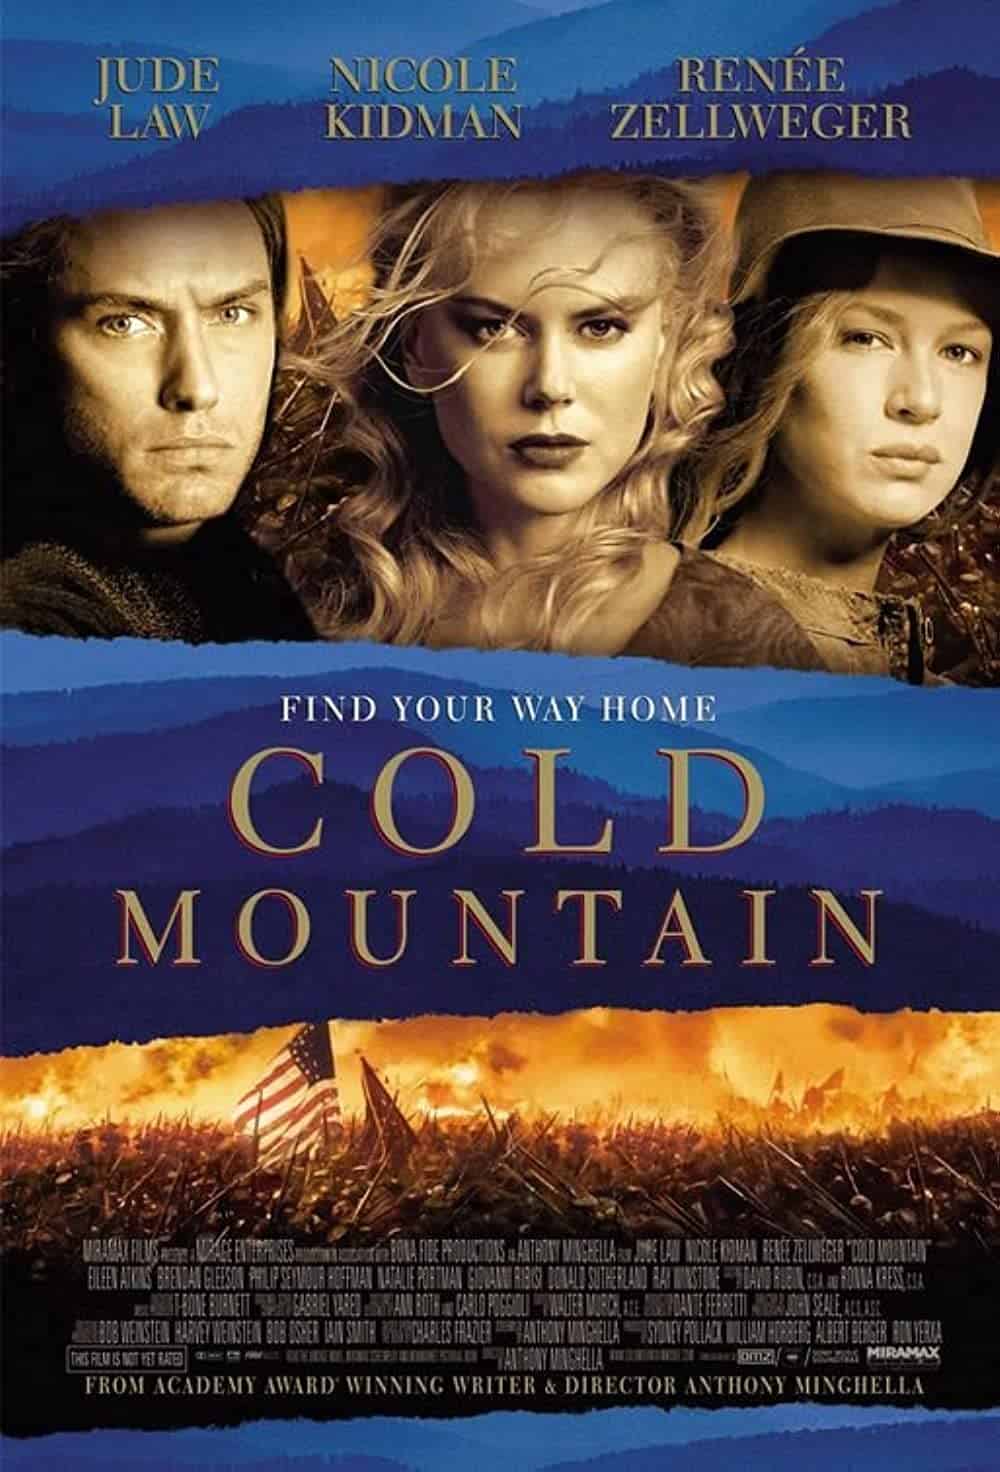 Cold Mountain (2003) Best Nicole Kidman Movies (Ranked)